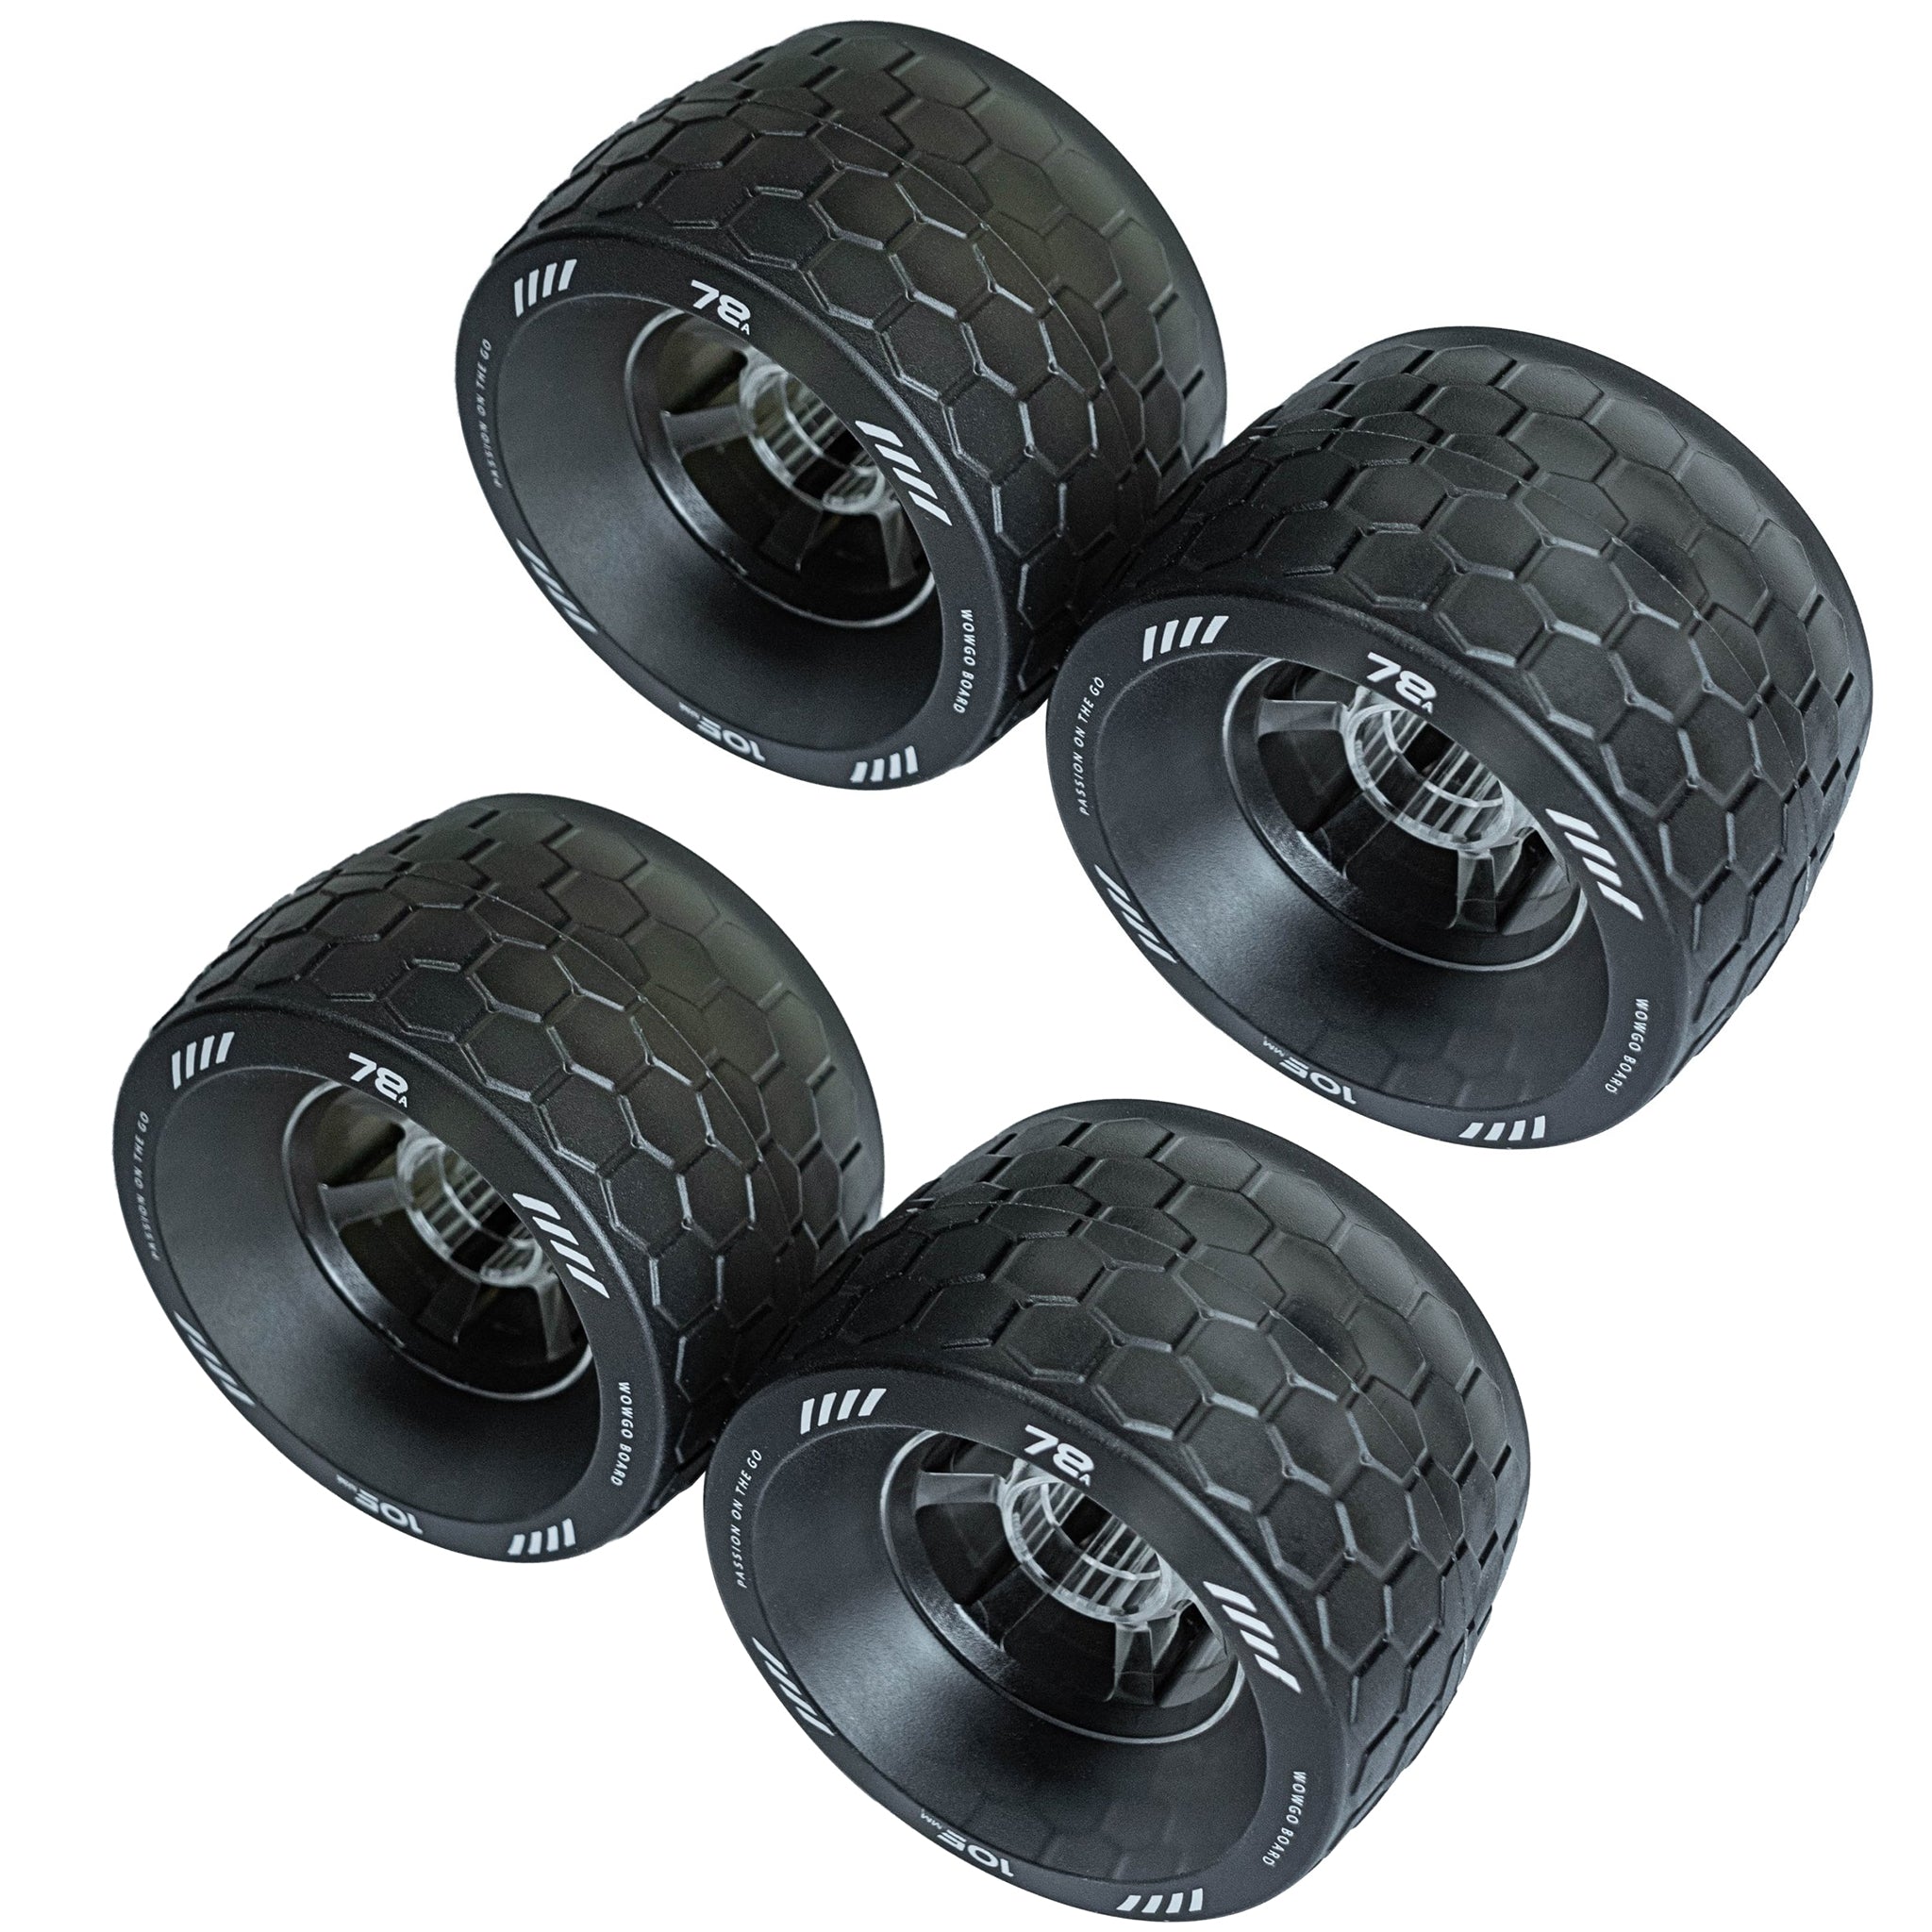 Wowgo honeycomb wheels for 3E (105 mm) - WOWGO BOARD